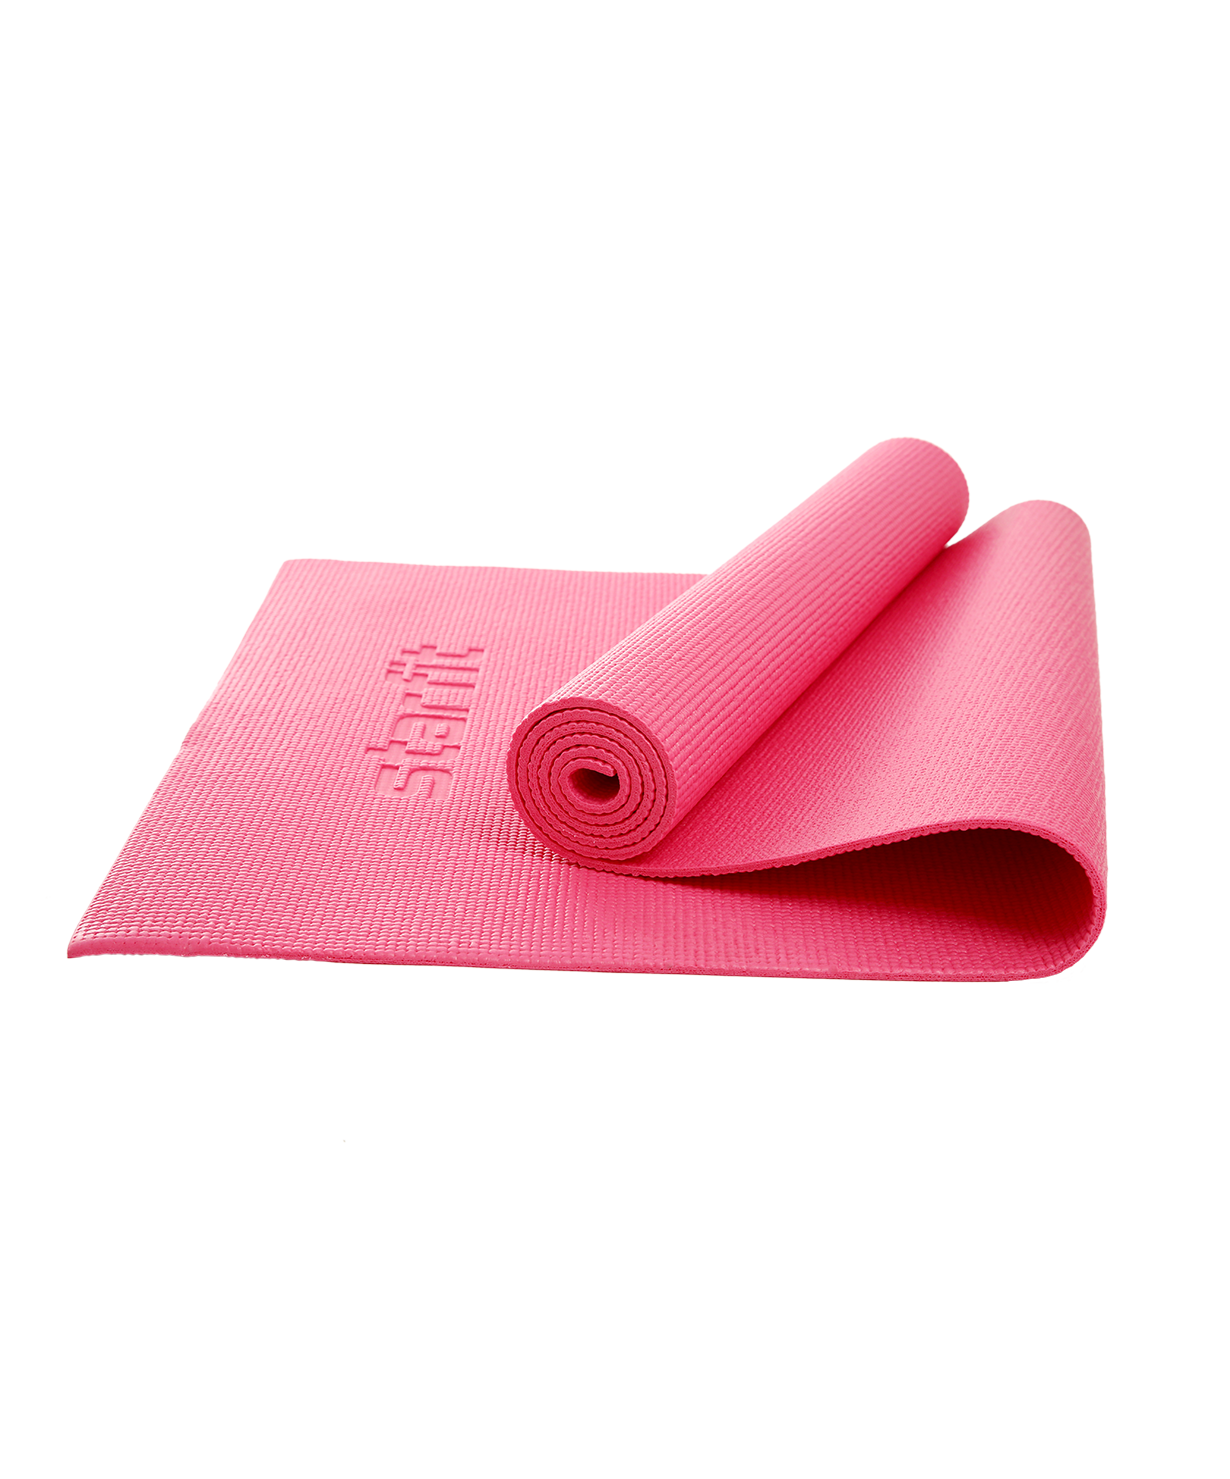 Коврик для йоги и фитнеса StarFit Core FM-101 pink 173 см, 6 мм